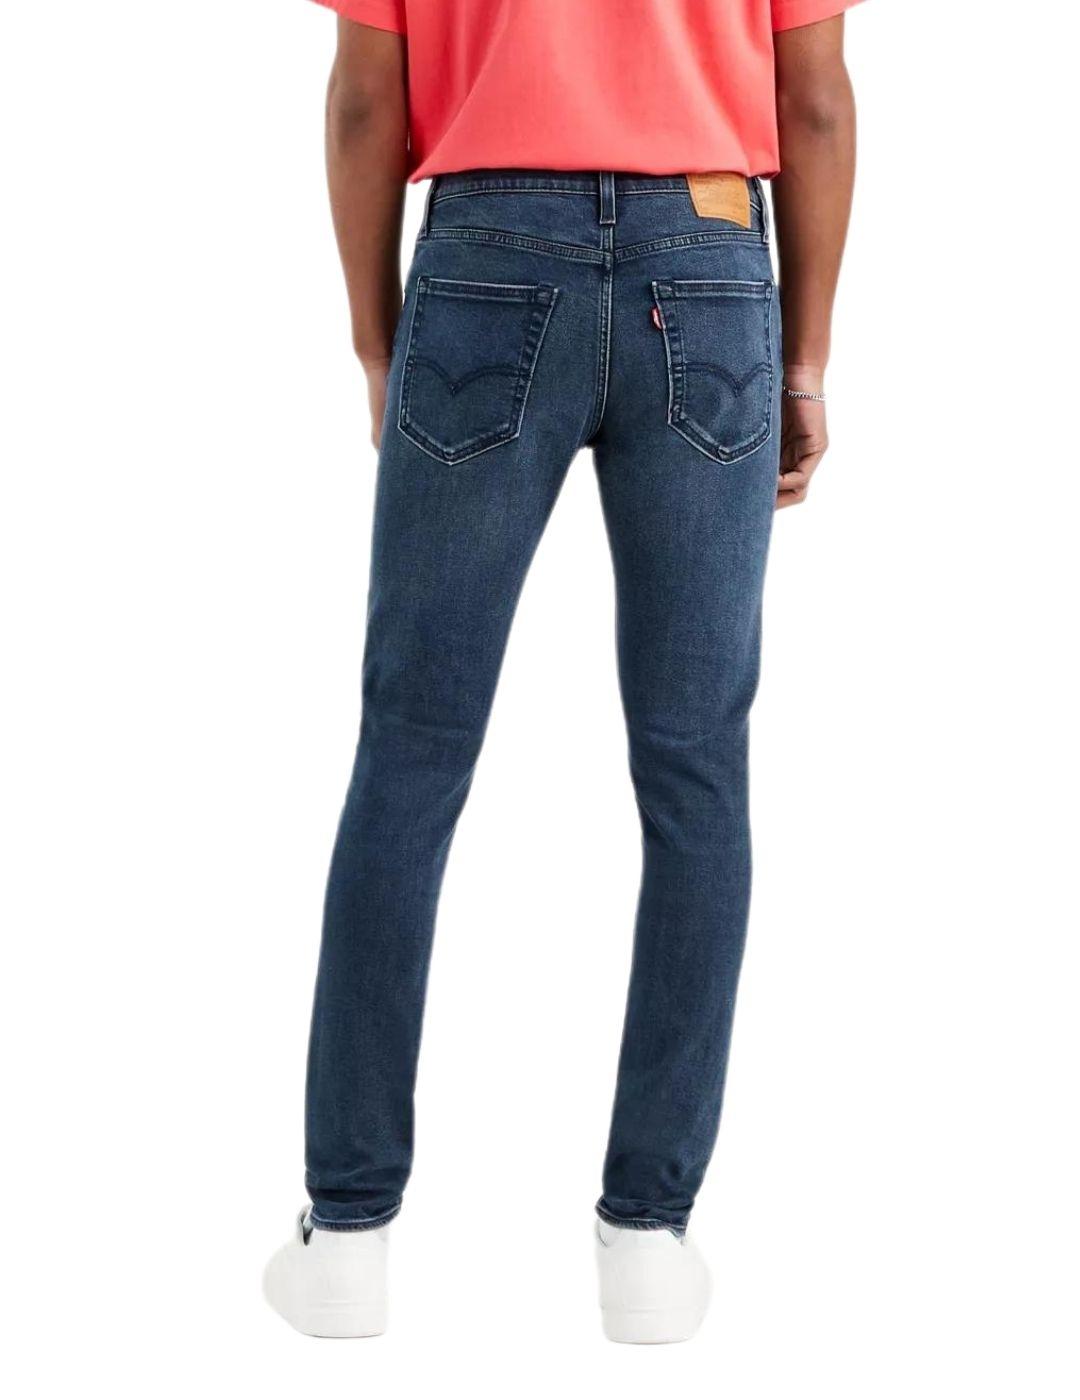 Pantalón Levi's® Skinny Taper Jeans Ocean Pewter Adv